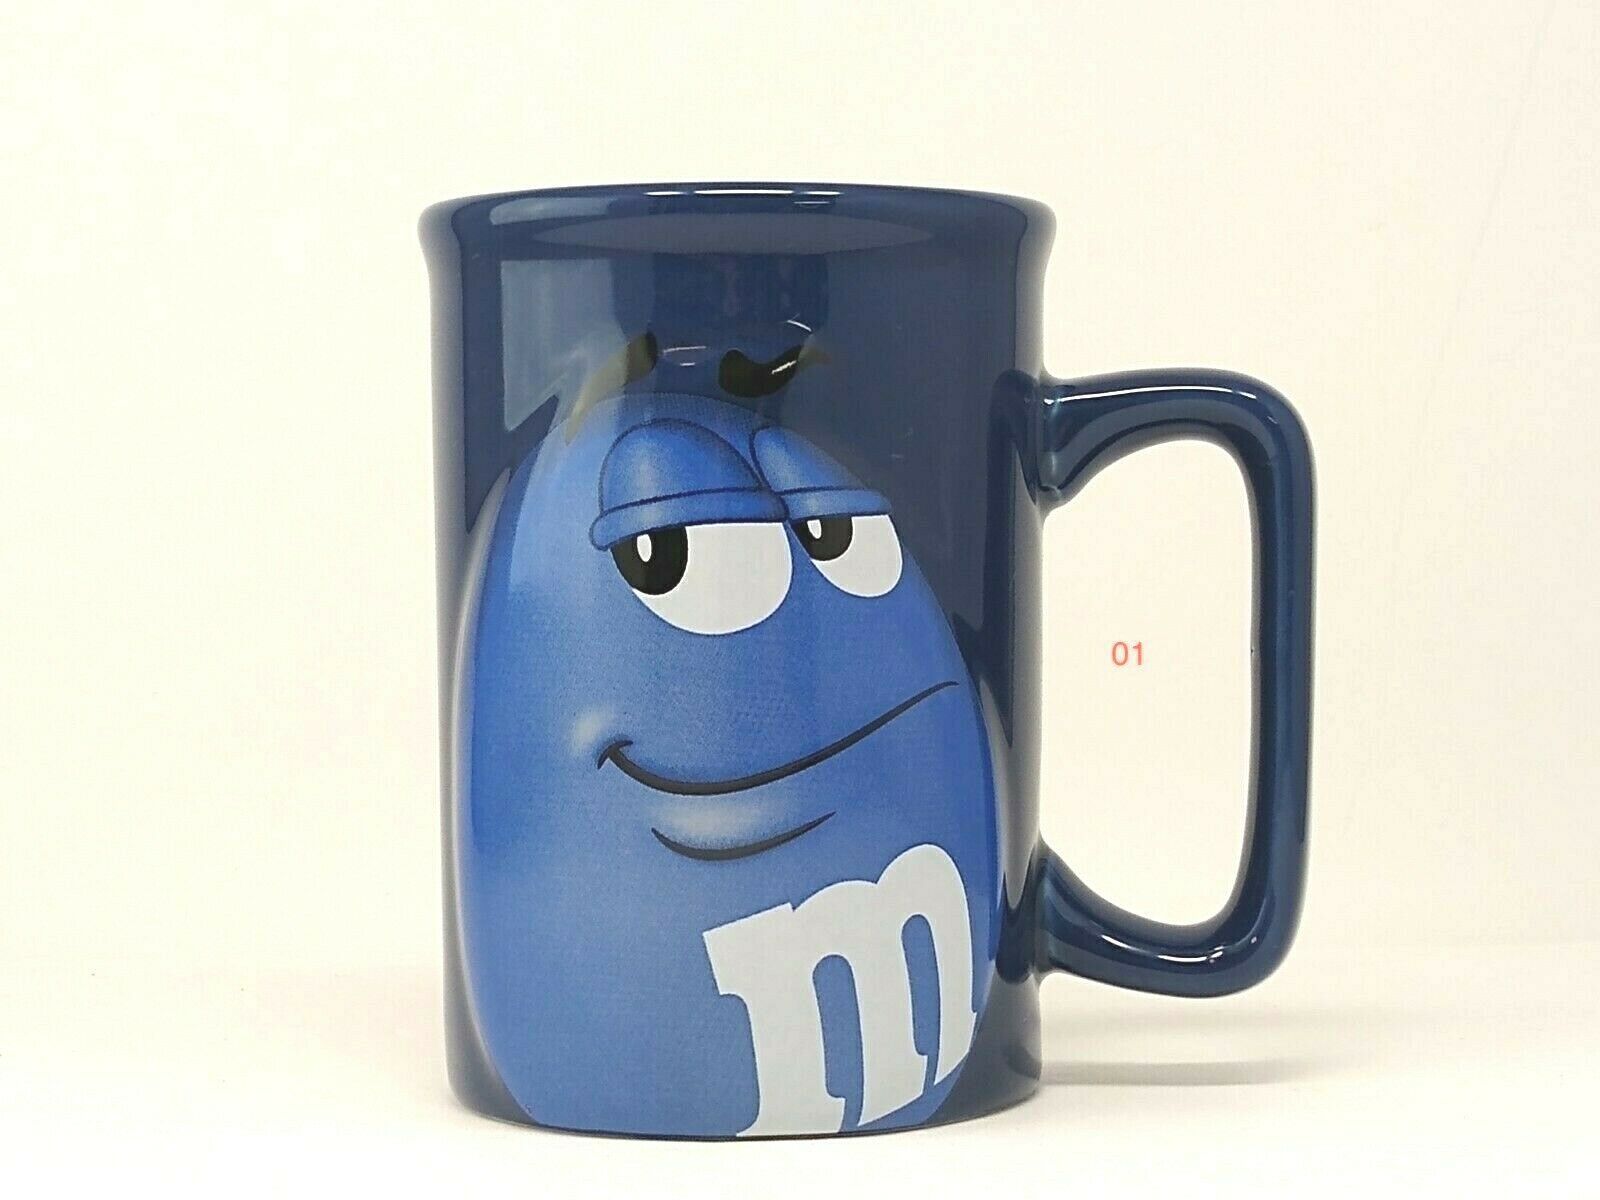 M&M'S Mars Coffee Mug Dinnerware Collection Ceramic Tea Milk Cup - $14.84 - $27.71